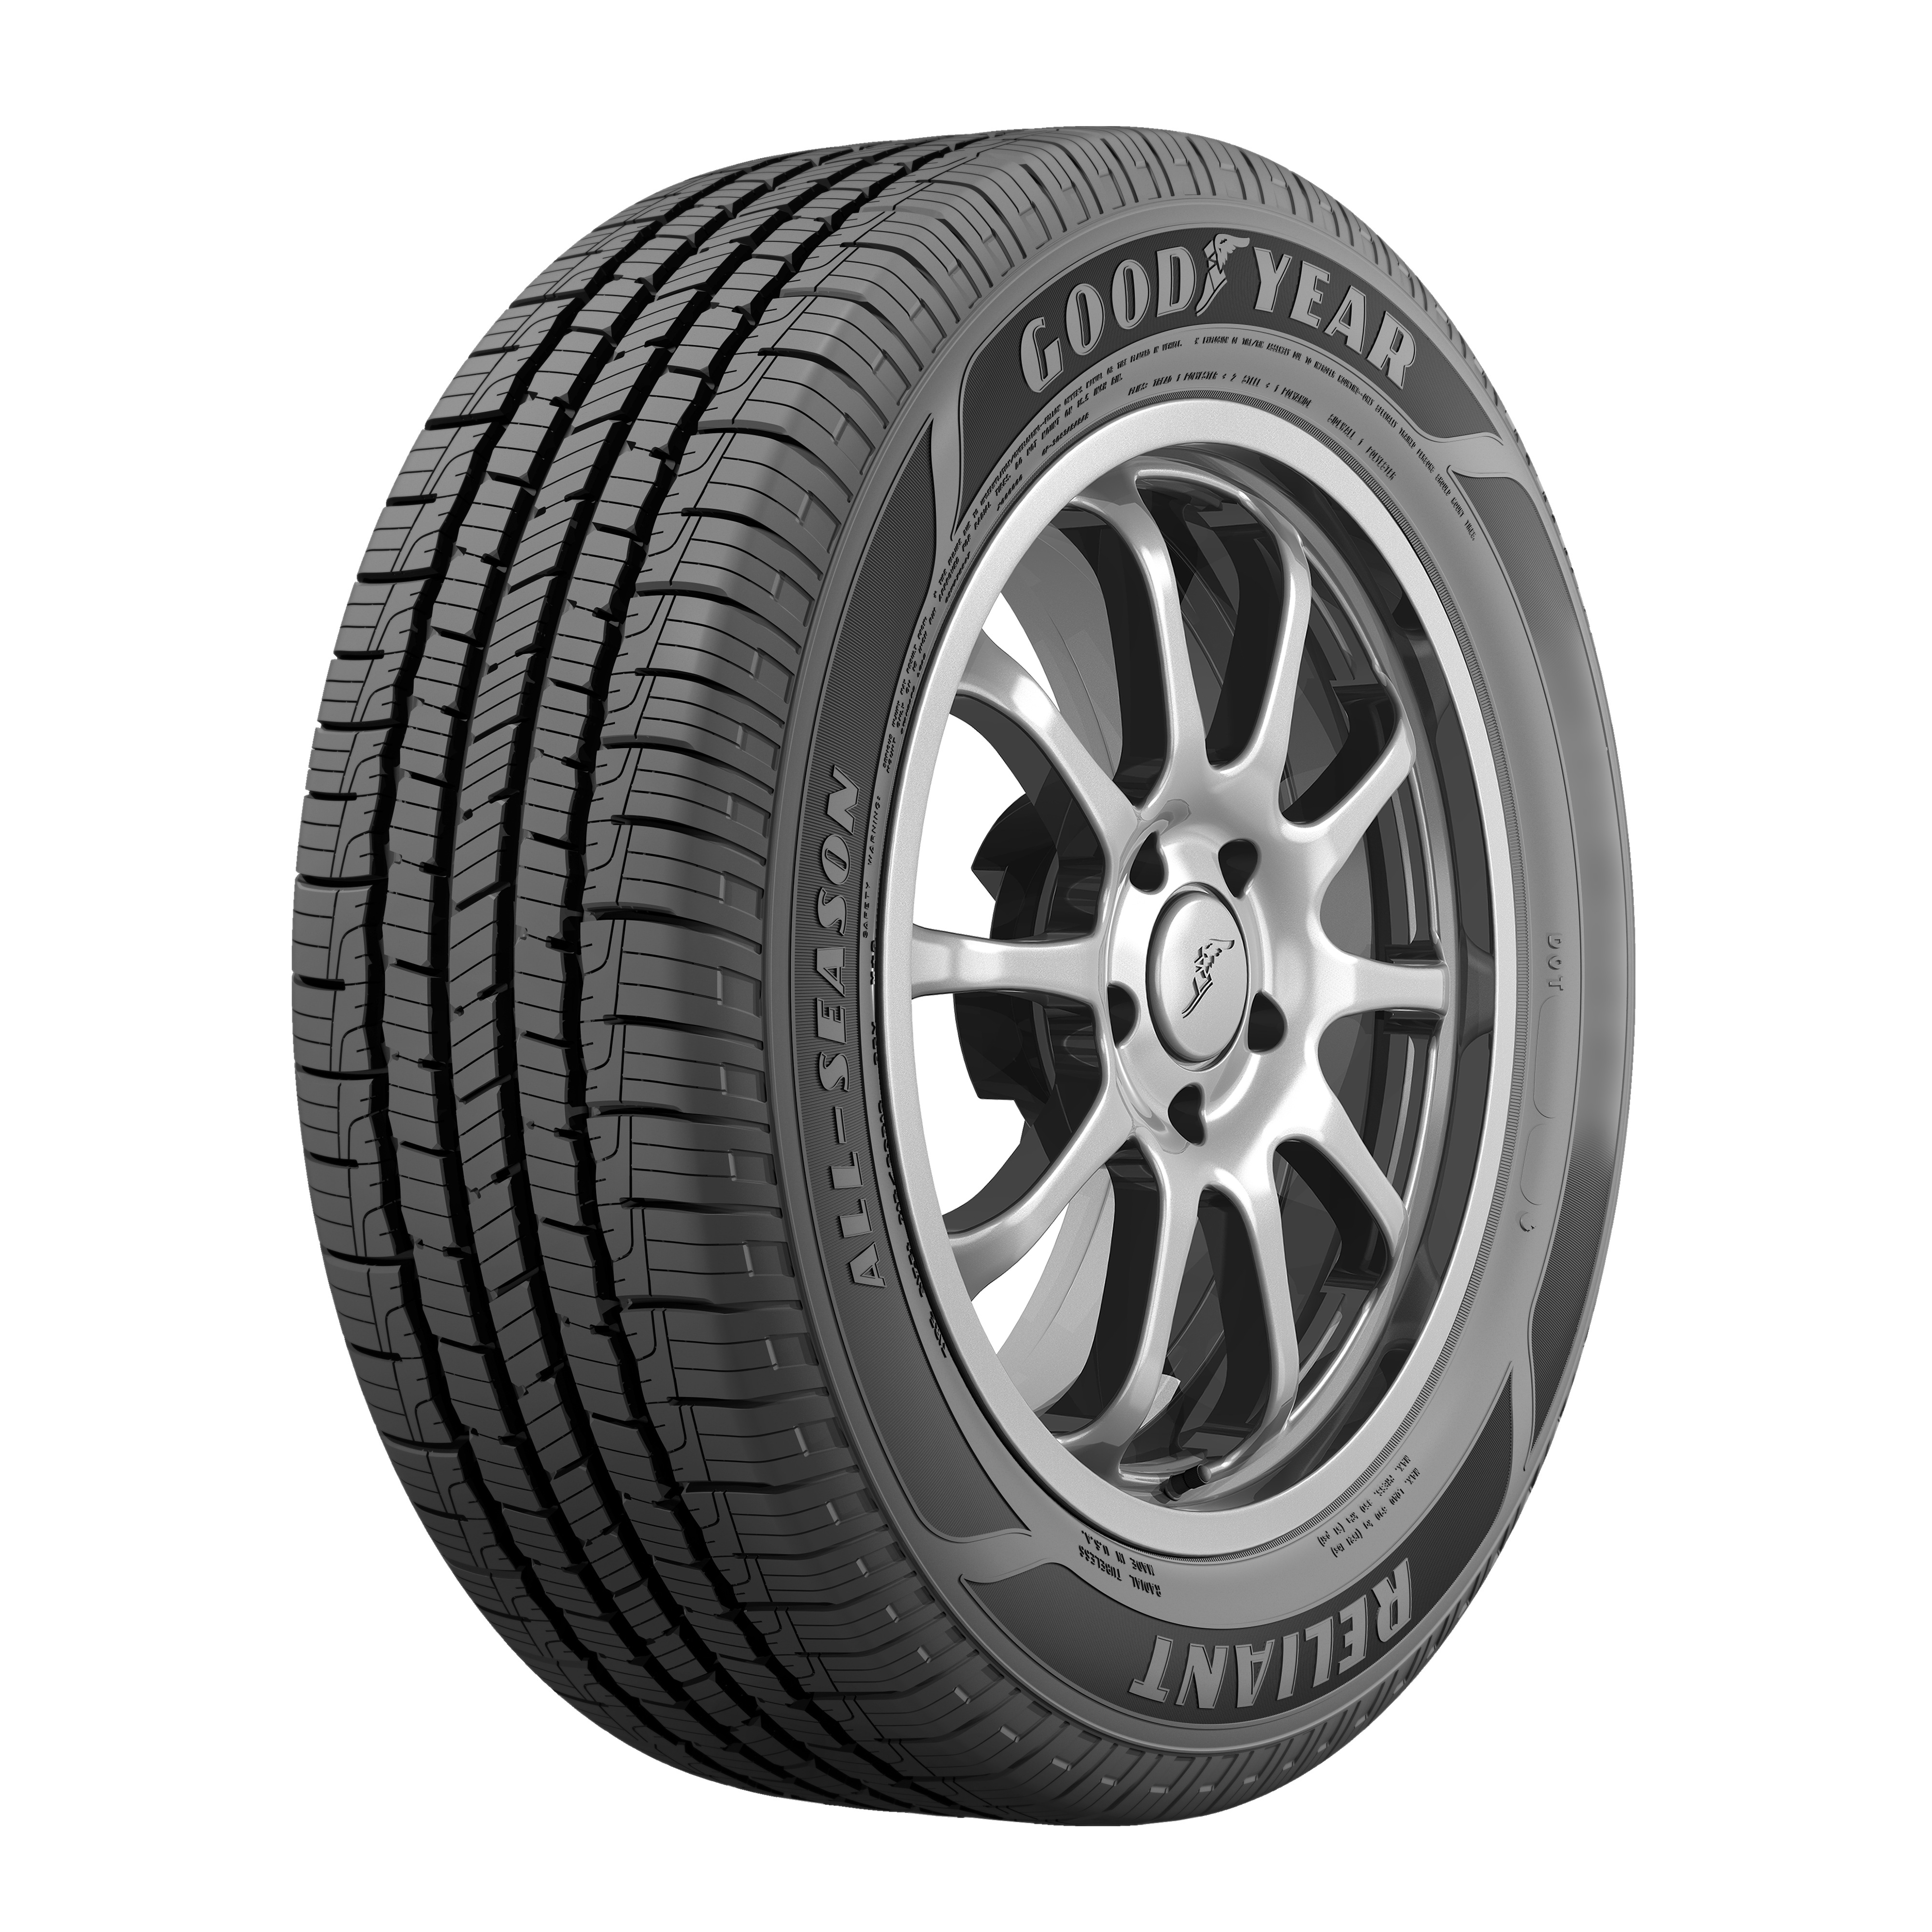 Goodyear Reliant All-Season 205/55R16 91V Tire - Walmart.com $79